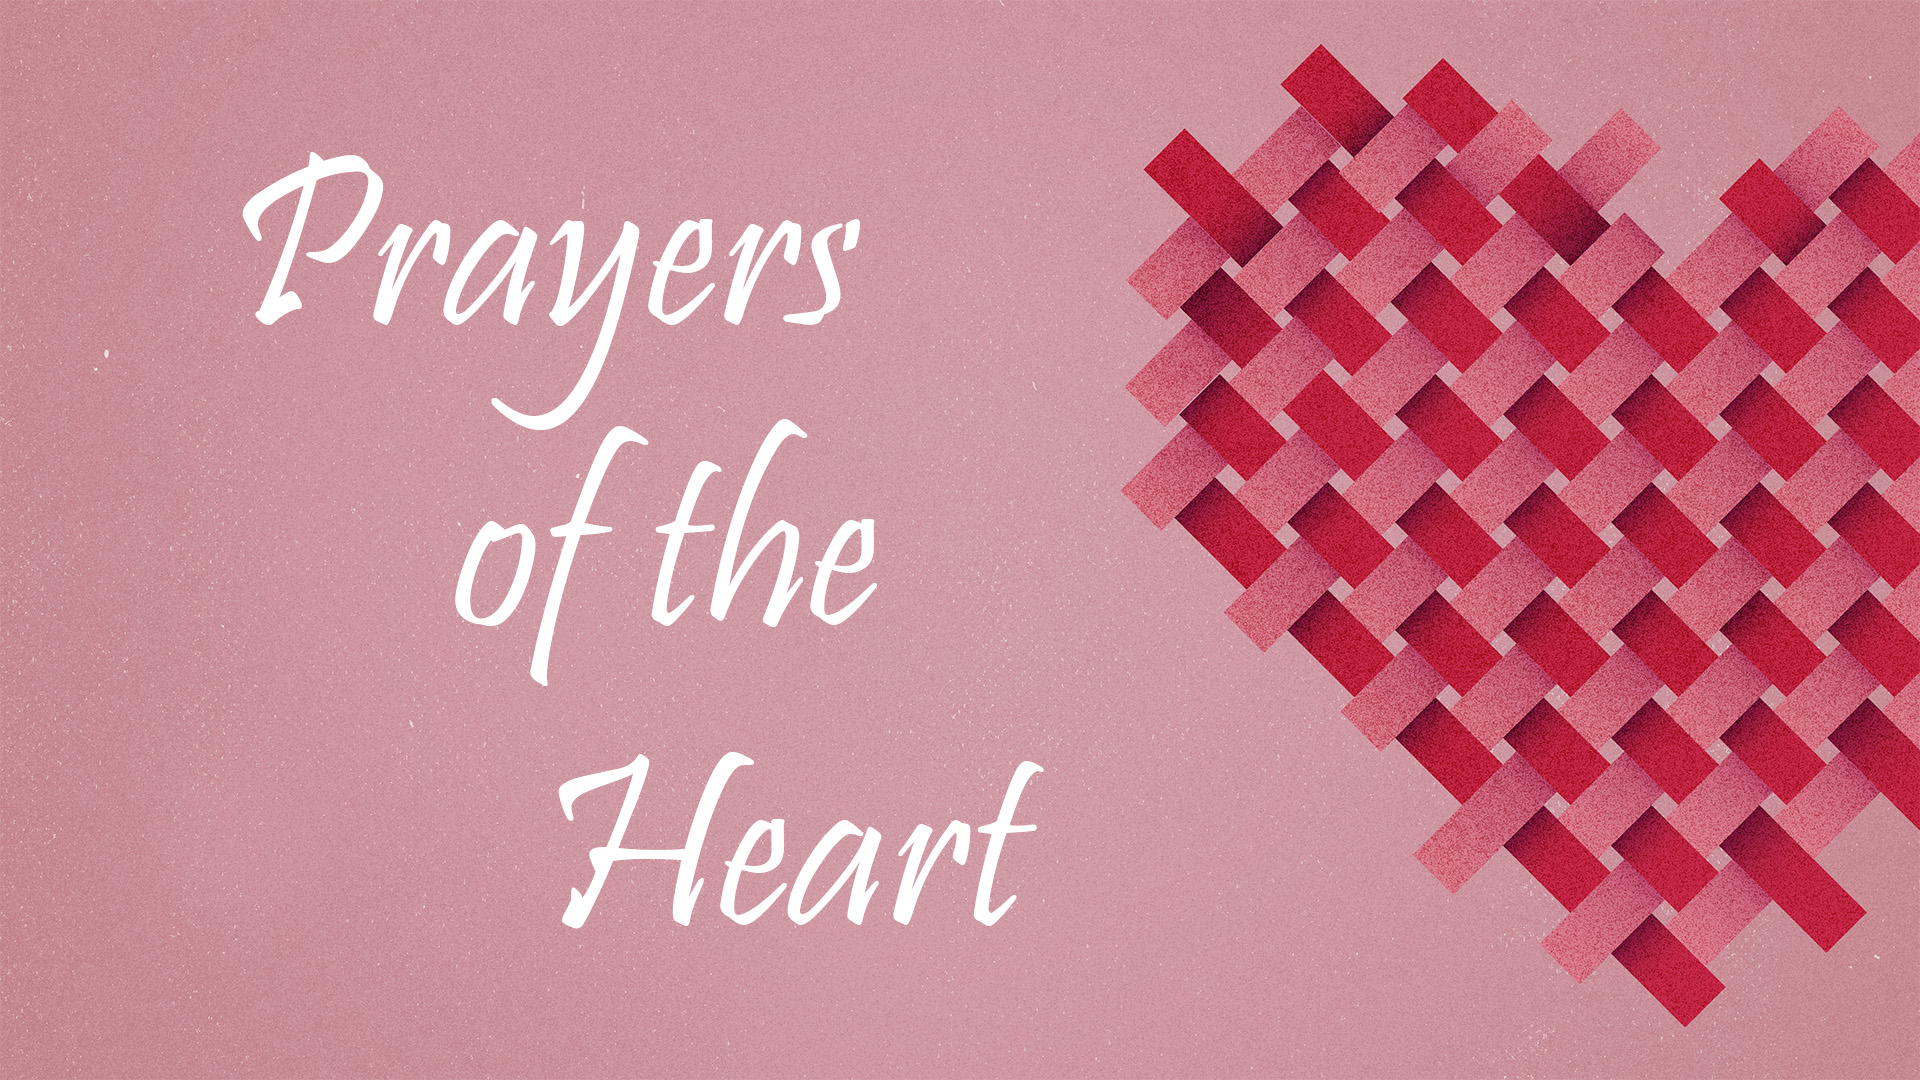 Prayers of the Heart banner